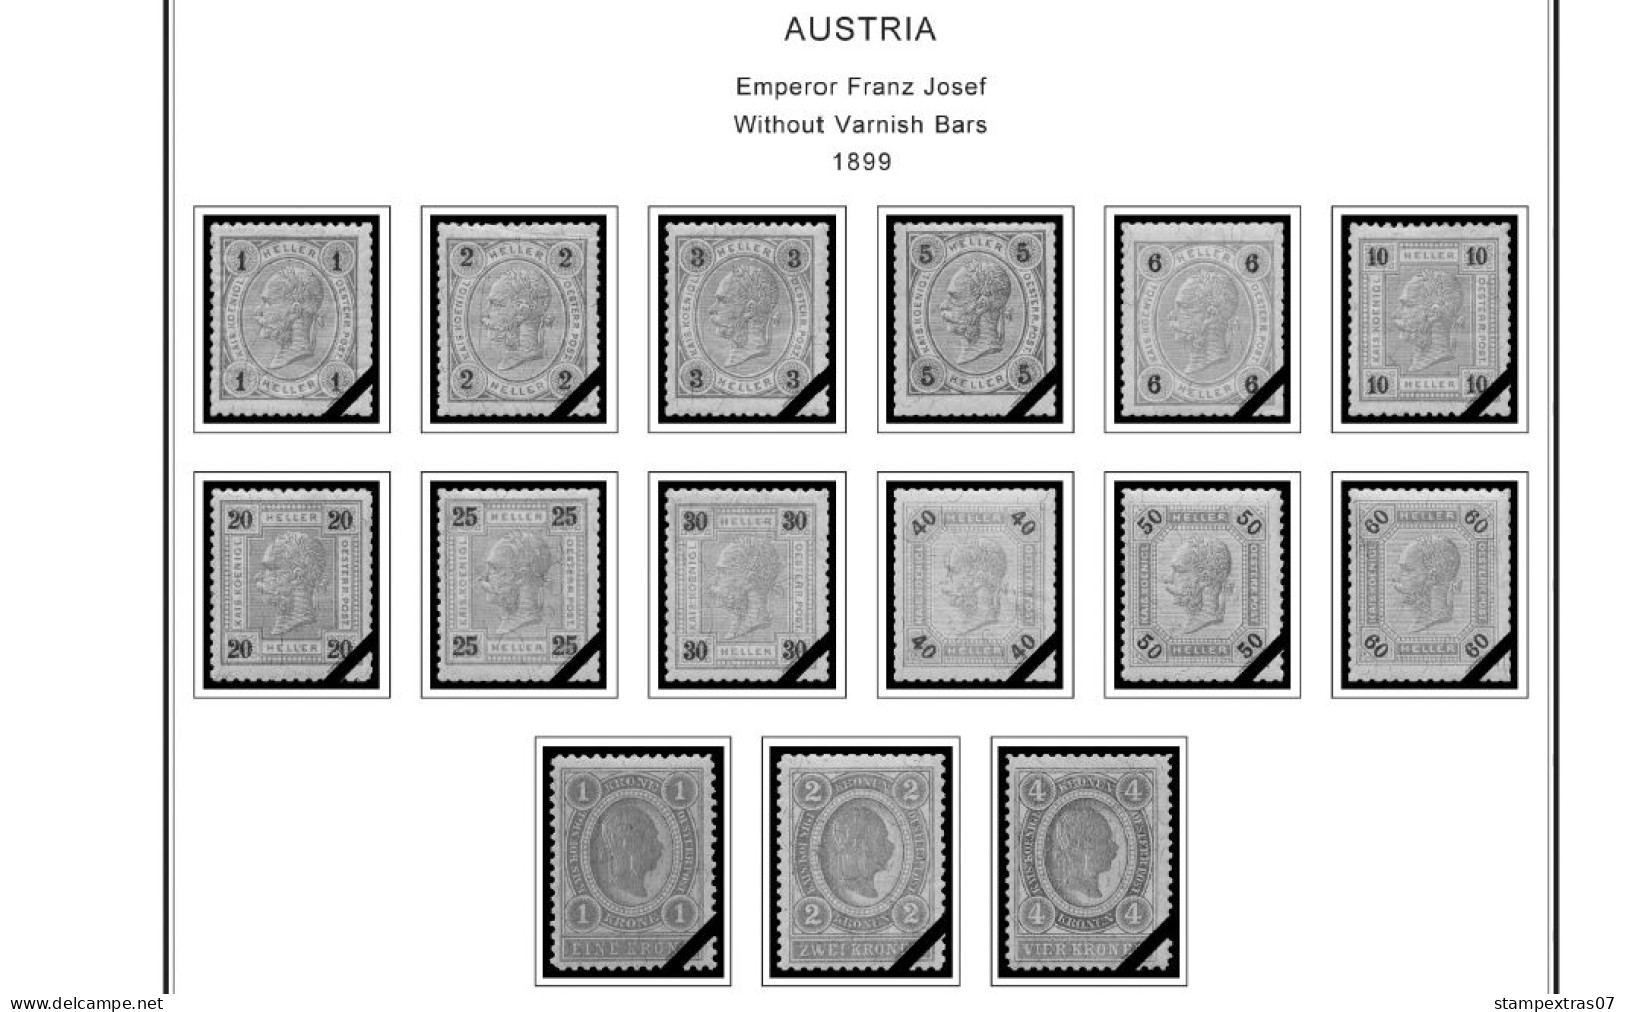 AUSTRIA 1850-2010 + 2011-2020 STAMP ALBUM PAGES (417 B&w Illustrated Pages) - Inglés